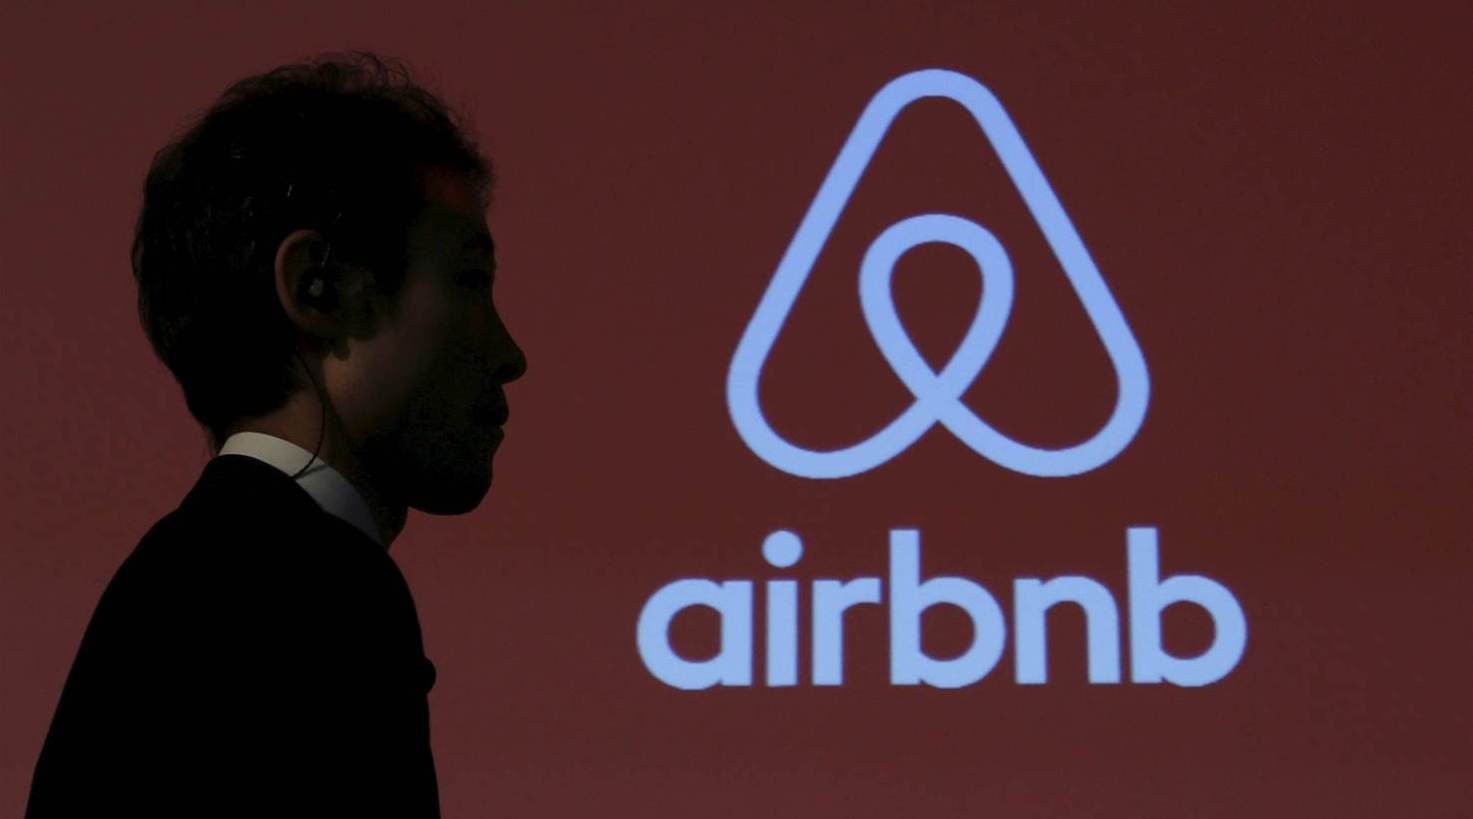 Airbnb gets respite as Japan's antitrust watchdog ends inspection of home-sharing platform